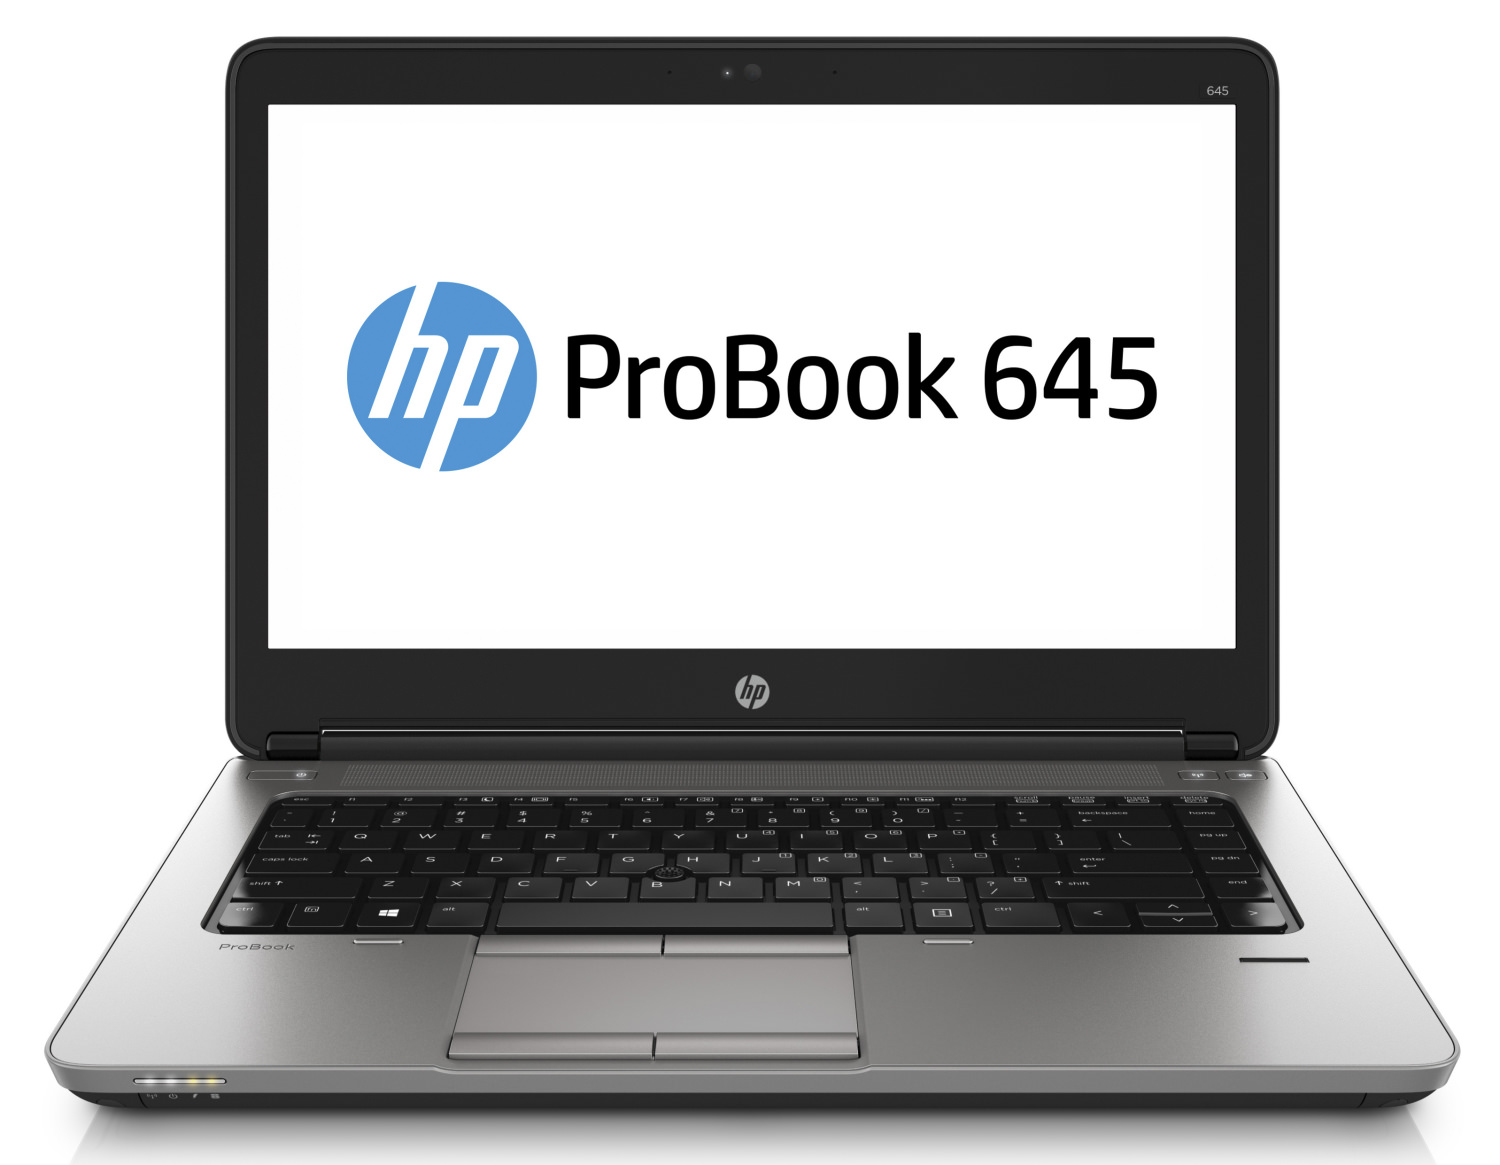 USED HP Probook 645 G1, 14 inch Laptop, AMD A6 Processor, 8GB RAM, 500GB, Windows 10 Pro - image 1 of 1